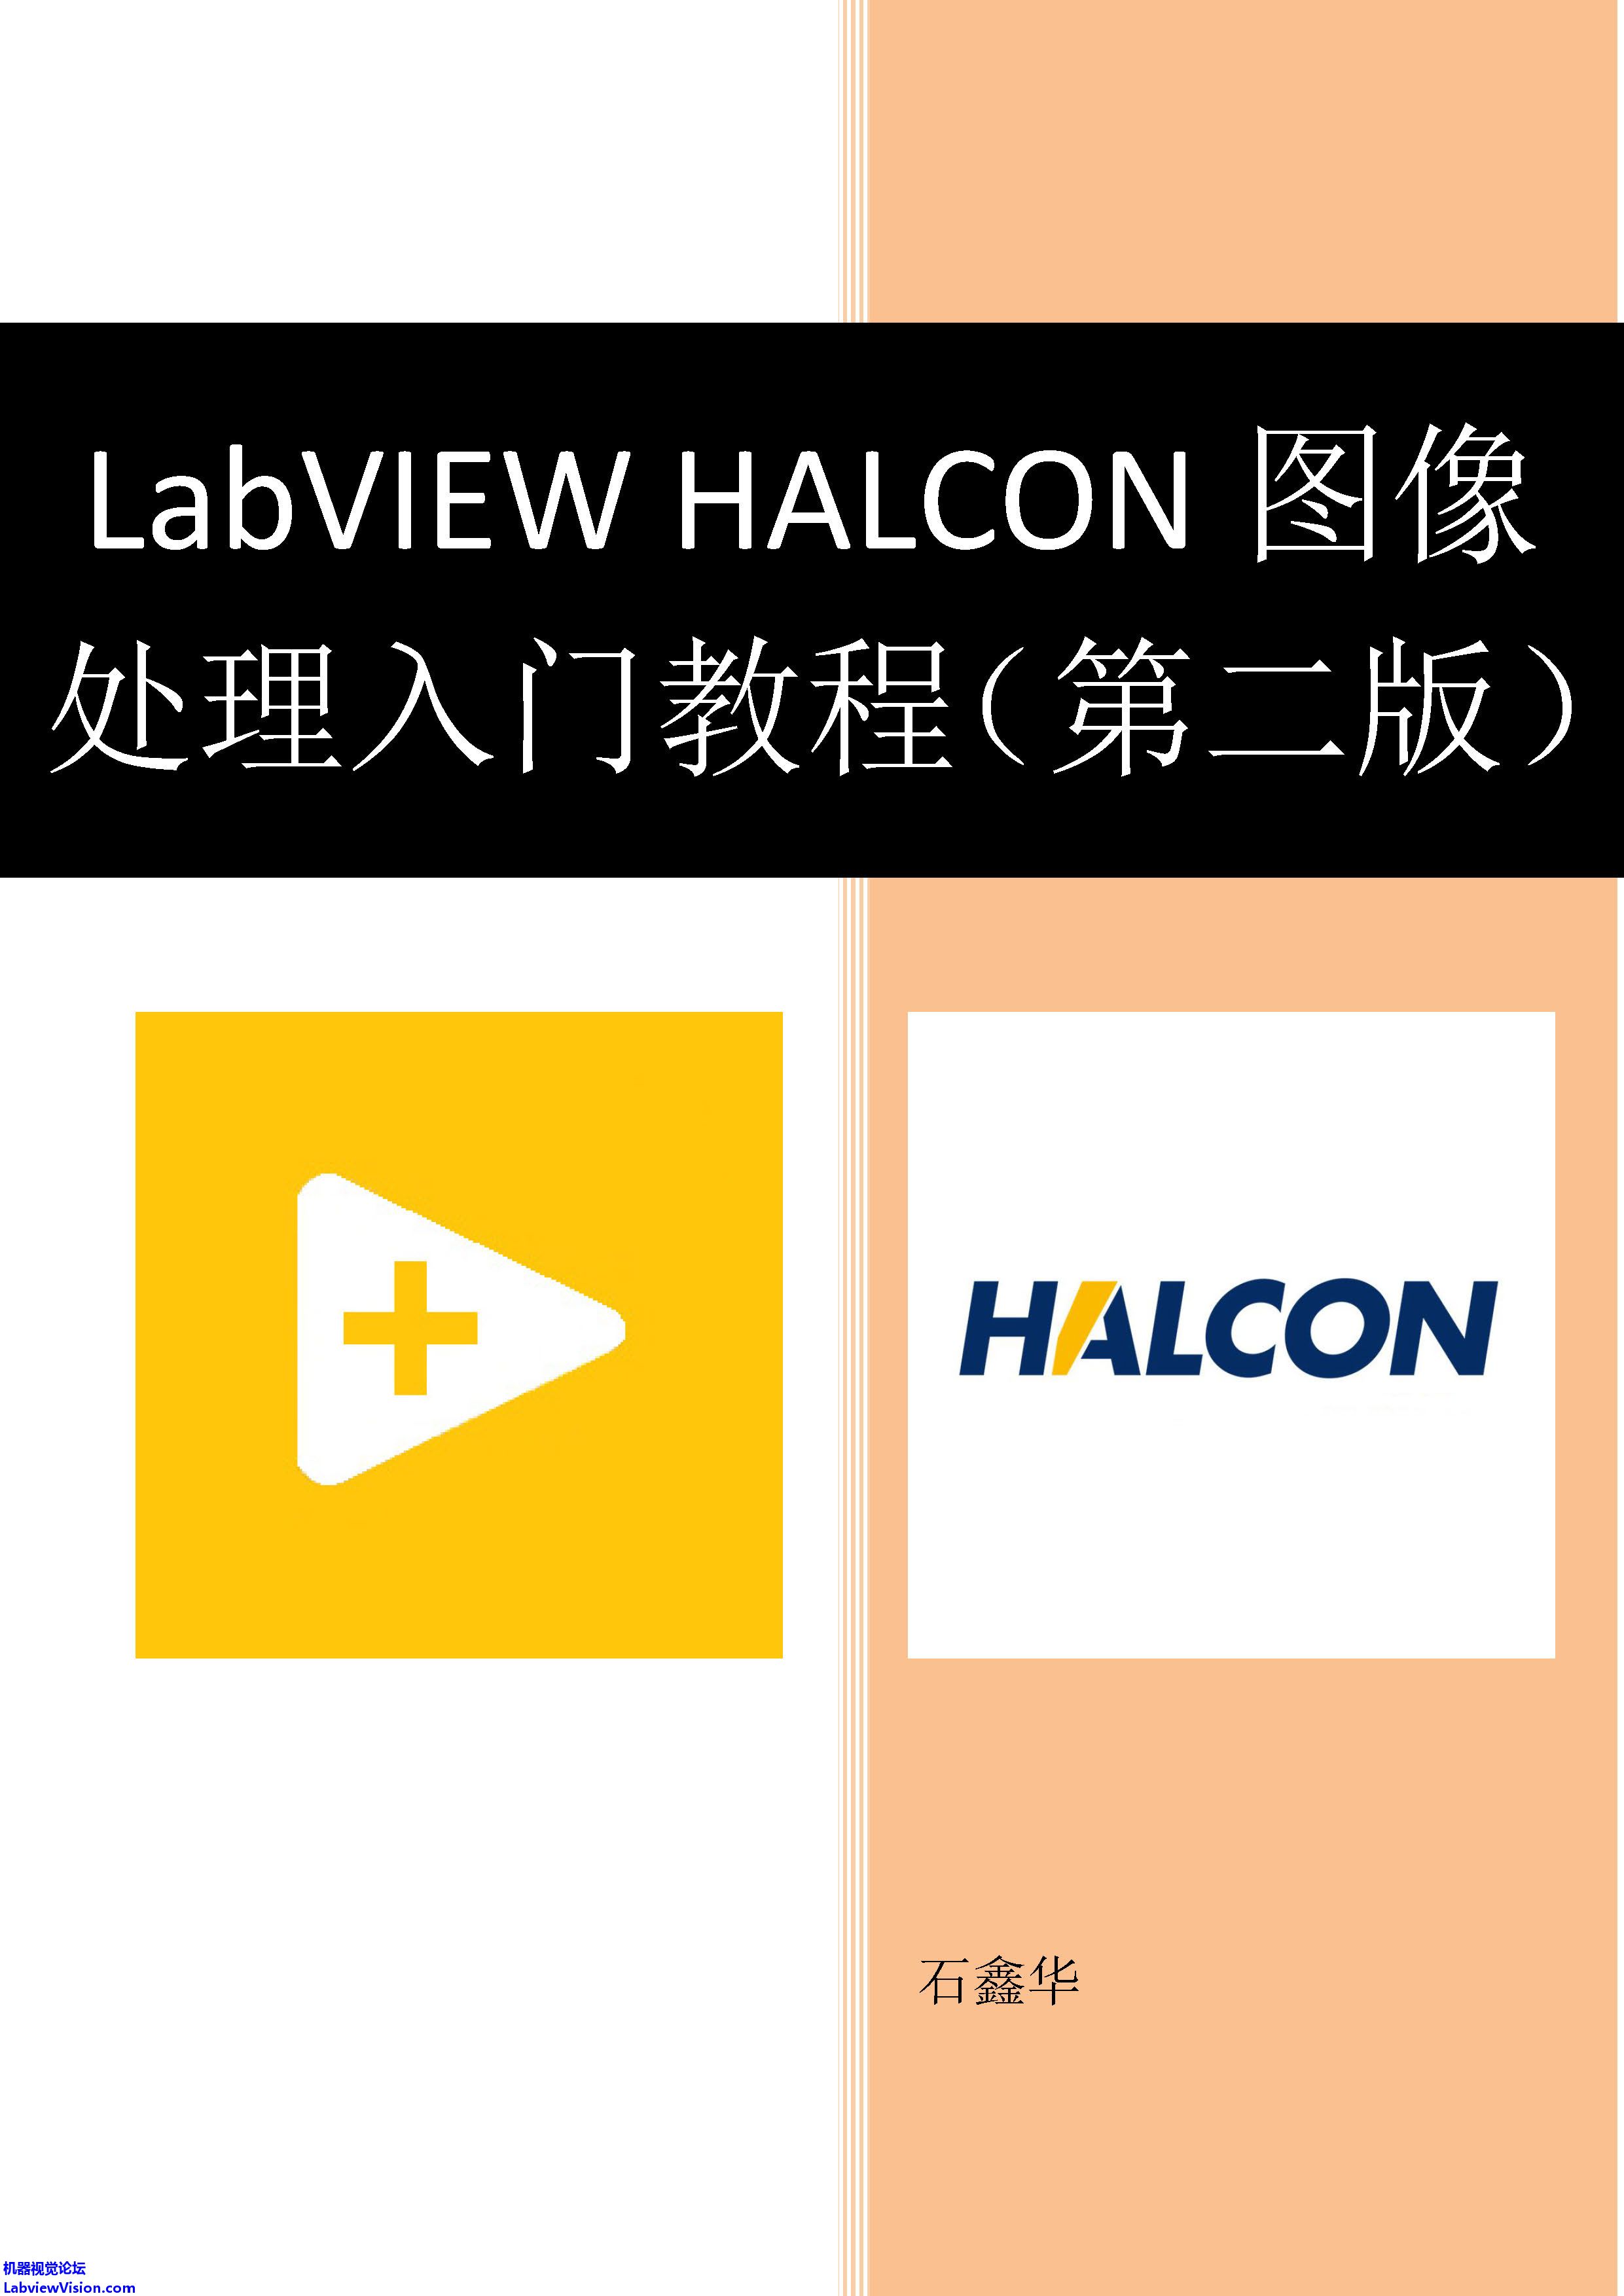 LabVIEW HALCON图像处理入门教程 - 第二版 - 试读版_页面_01.jpg